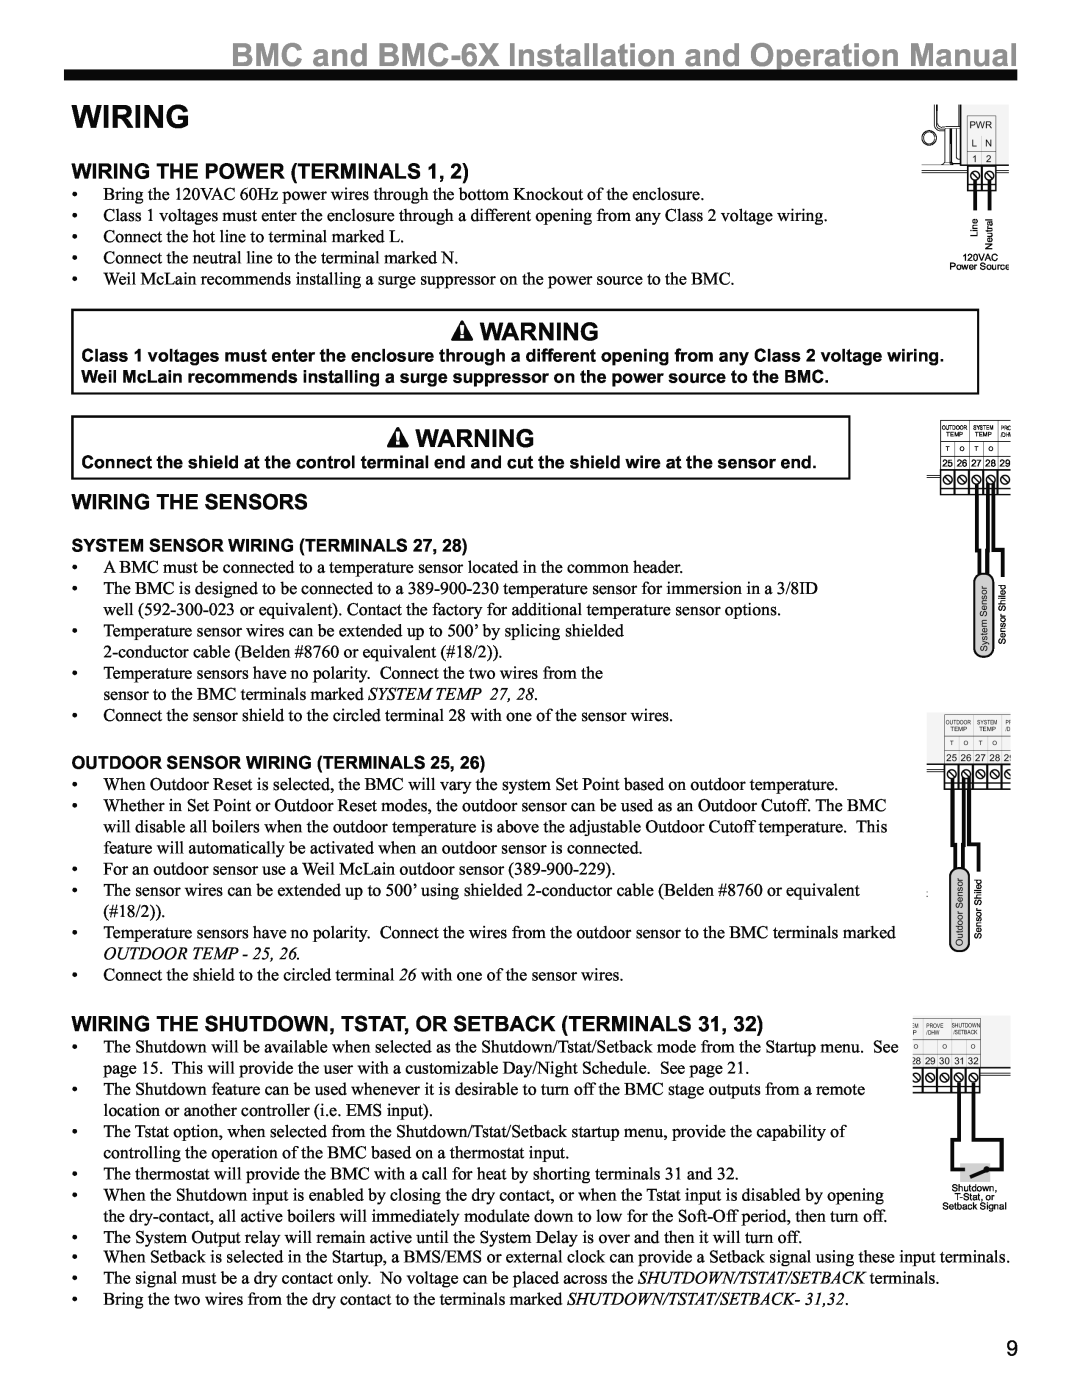 Weil-McLain BMC-6X operation manual Wiring The Power Terminals, Wiring The Sensors, System Sensor Wiring Terminals 